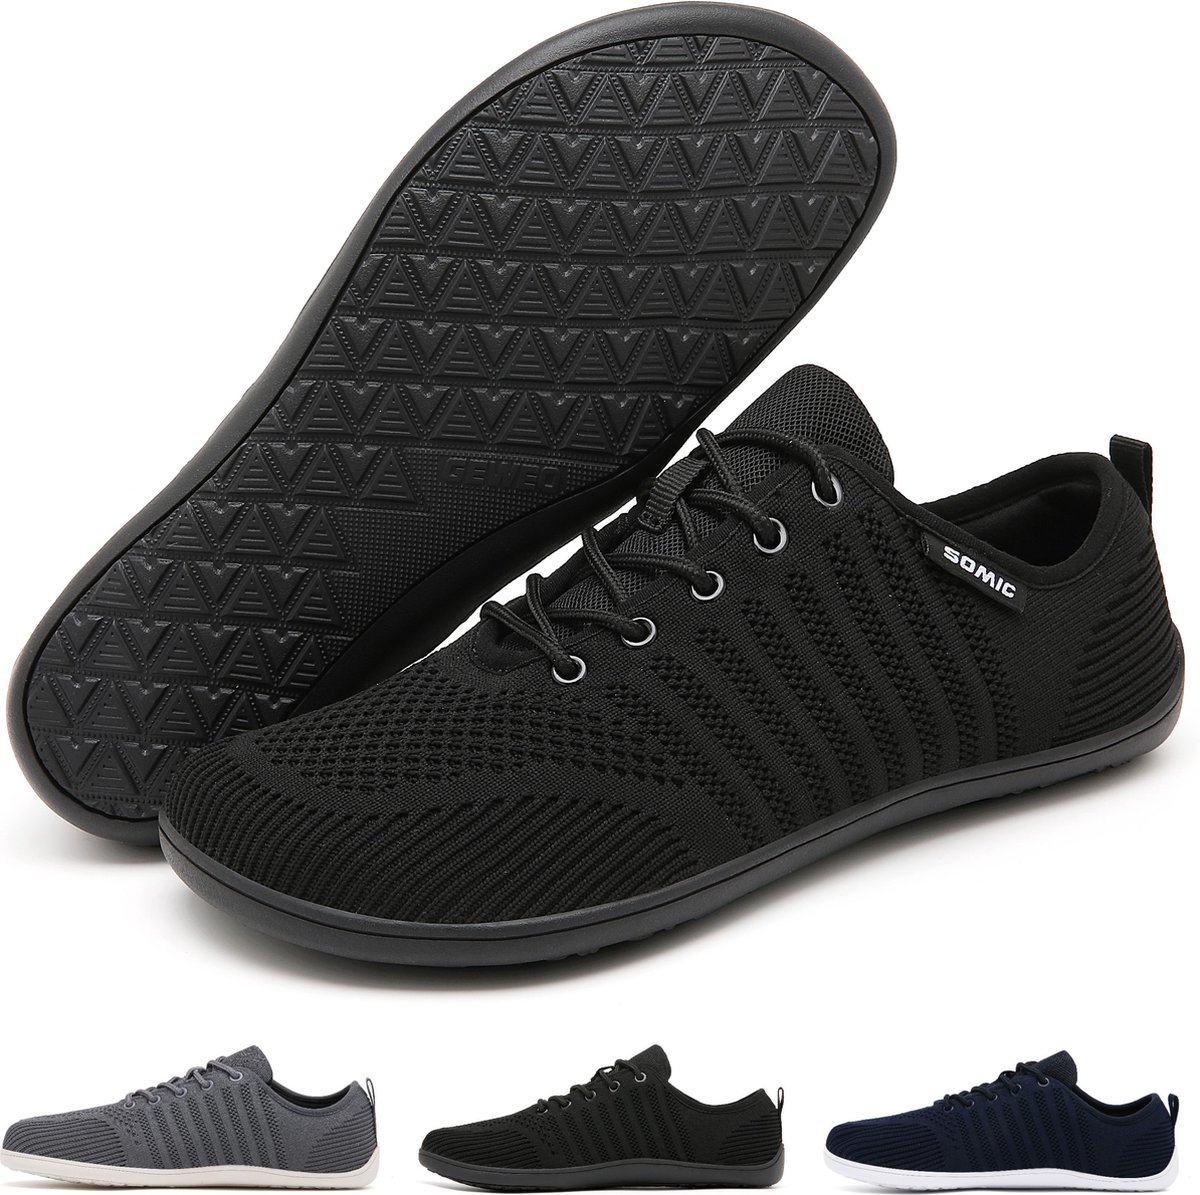 Somic Barefoot Schoenen - Sportschoenen Sneakers - Fitnessschoenen - Hardloopschoenen - Ademend Knit Textiel - Platte Zool - Zwart - Maat 39